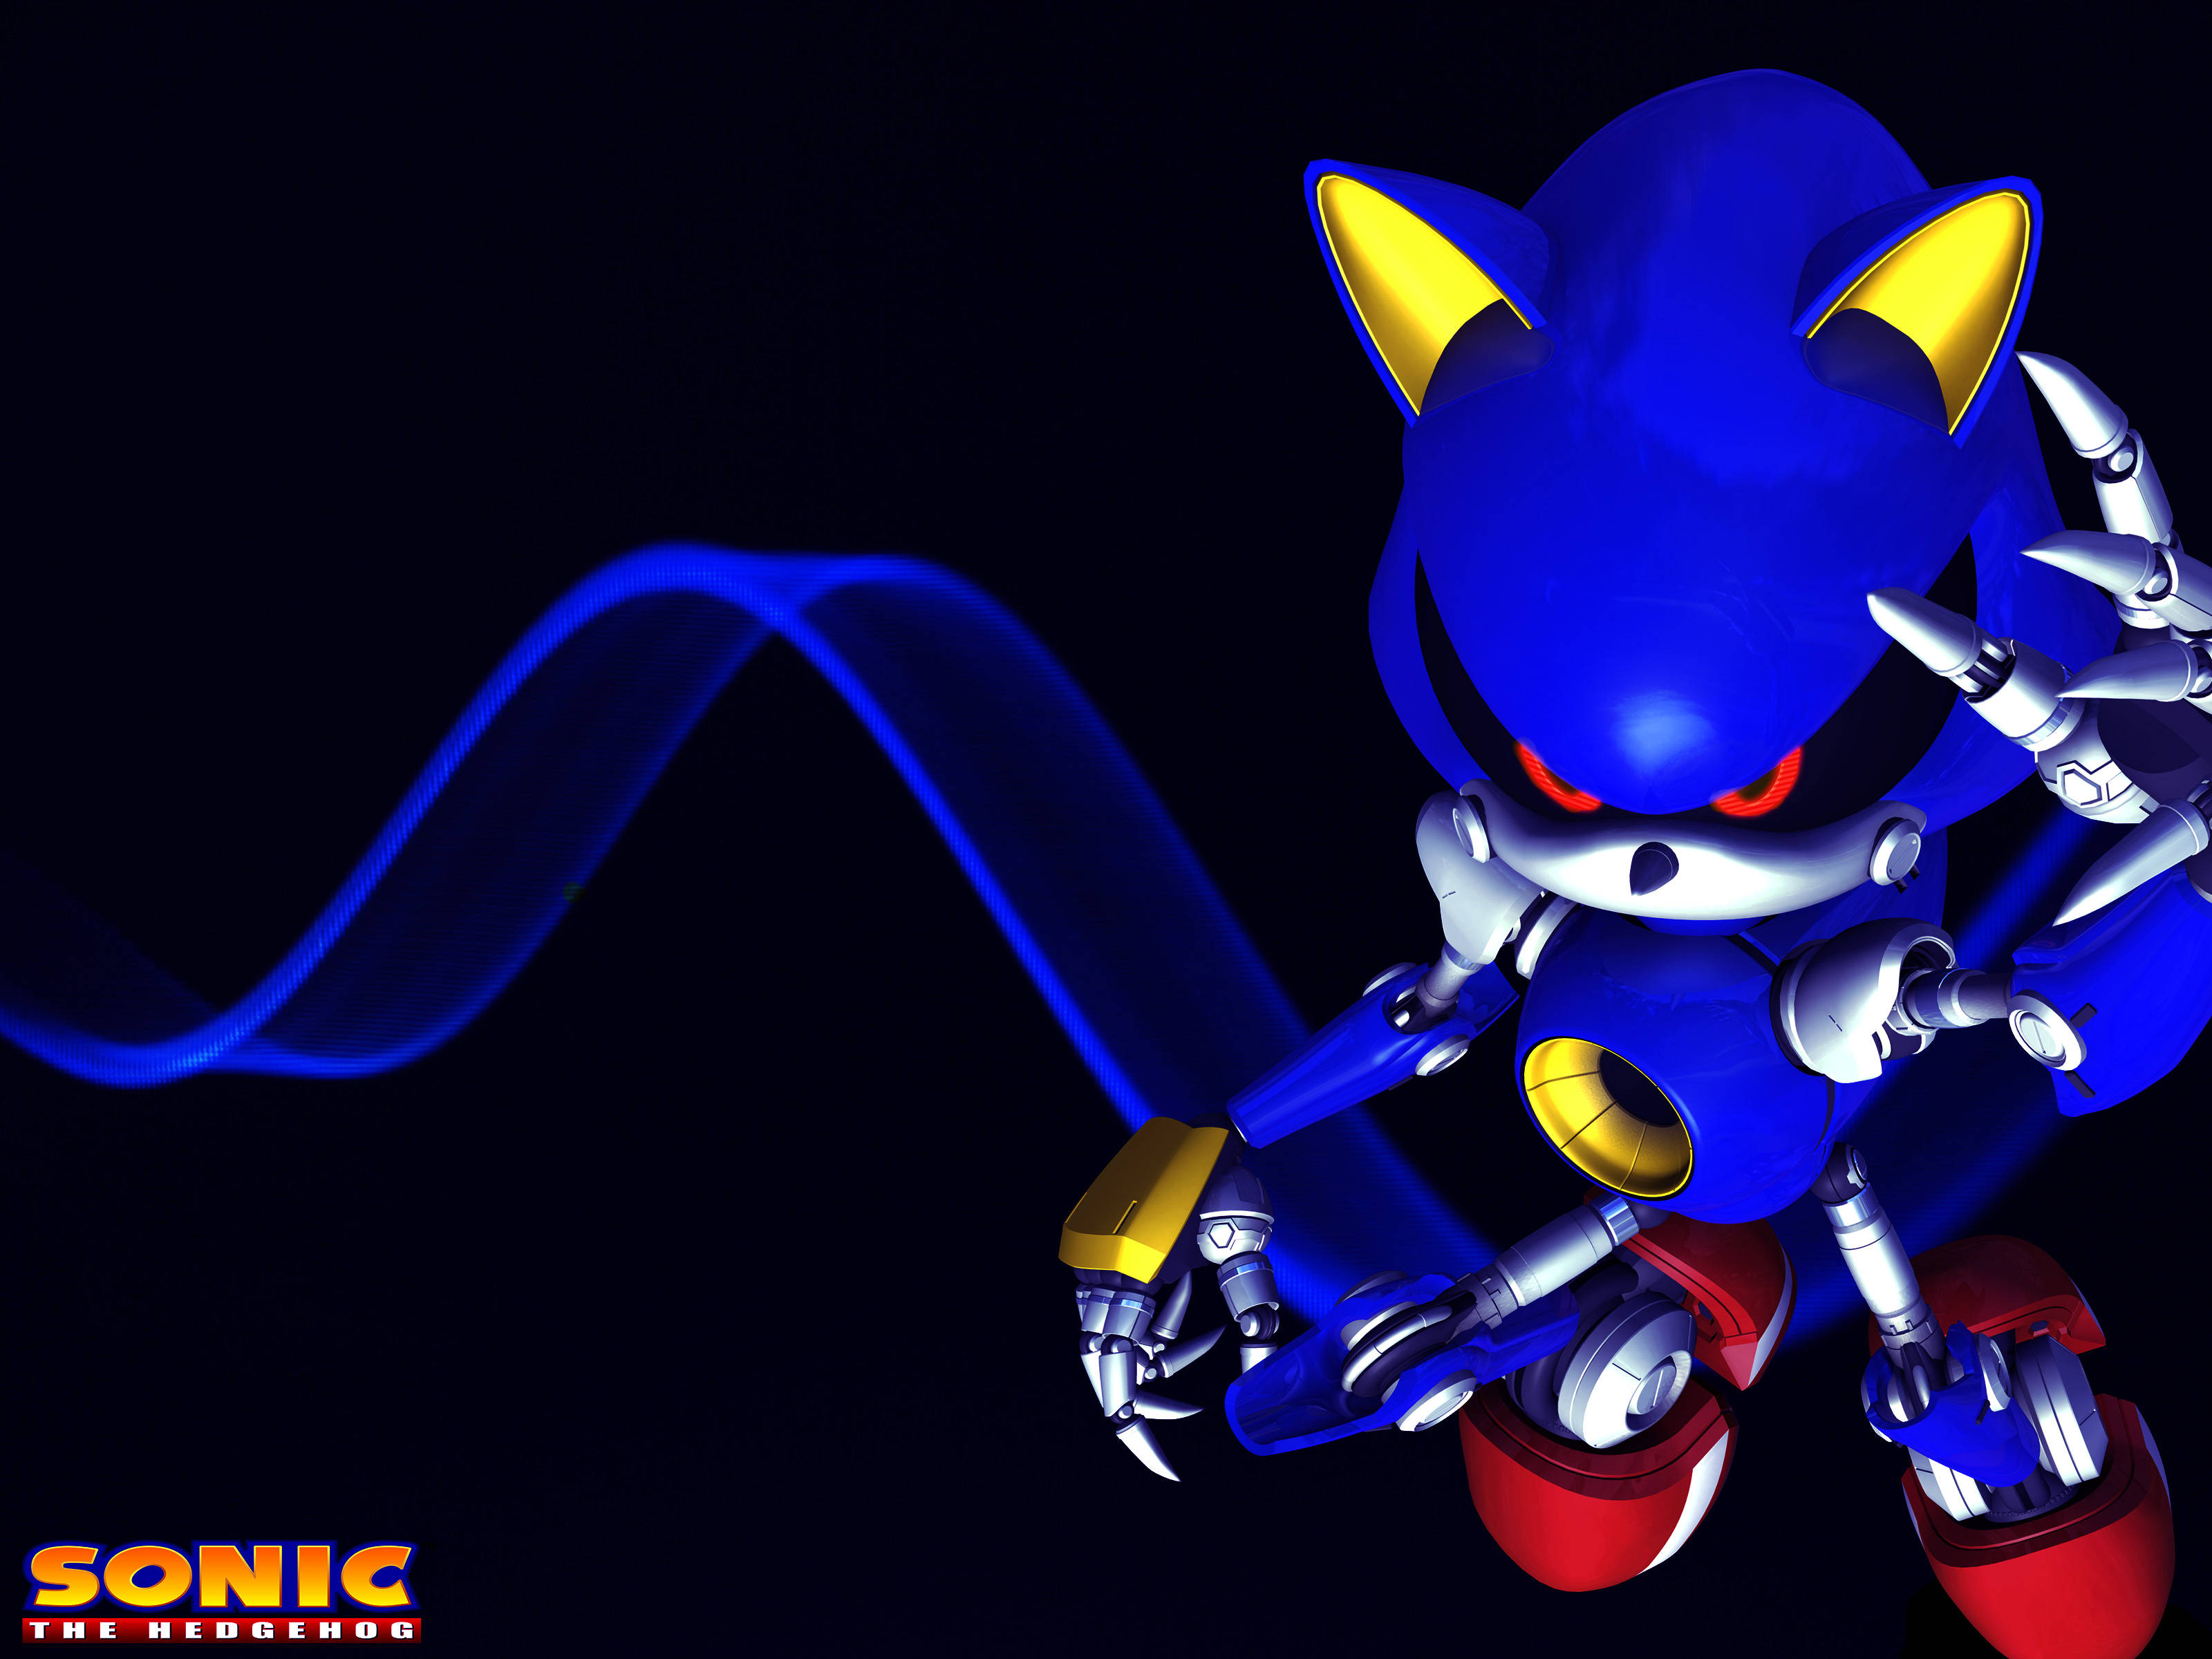 Sonic 2 на телефон. Метал Соник. Metal Sonic in Sonic 2. Sonic the Hedgehog метал Соник. Соник x метал Соник.